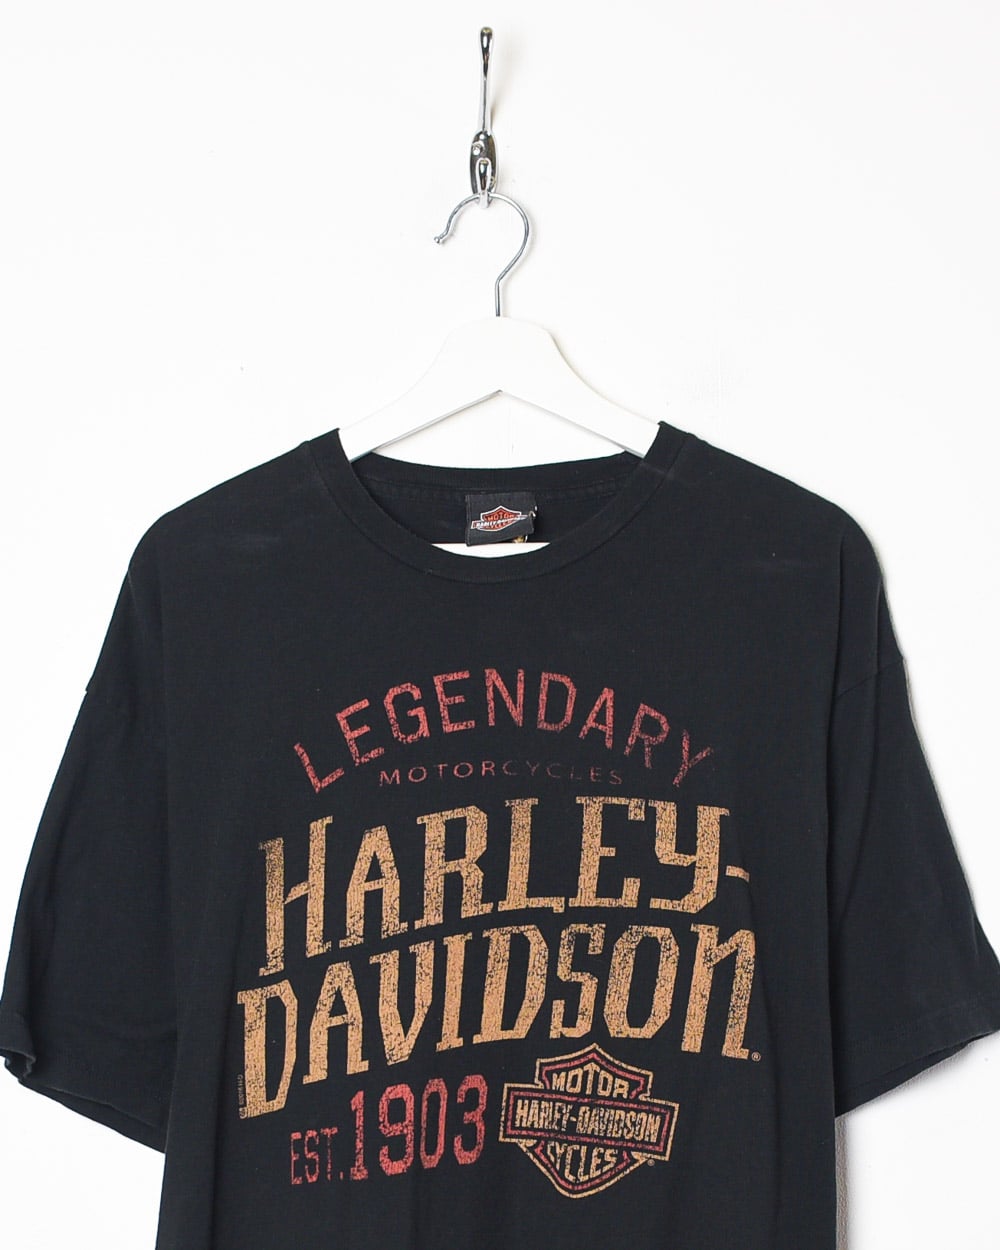 Black Harley Davidson Legendary T-Shirt - X-Large